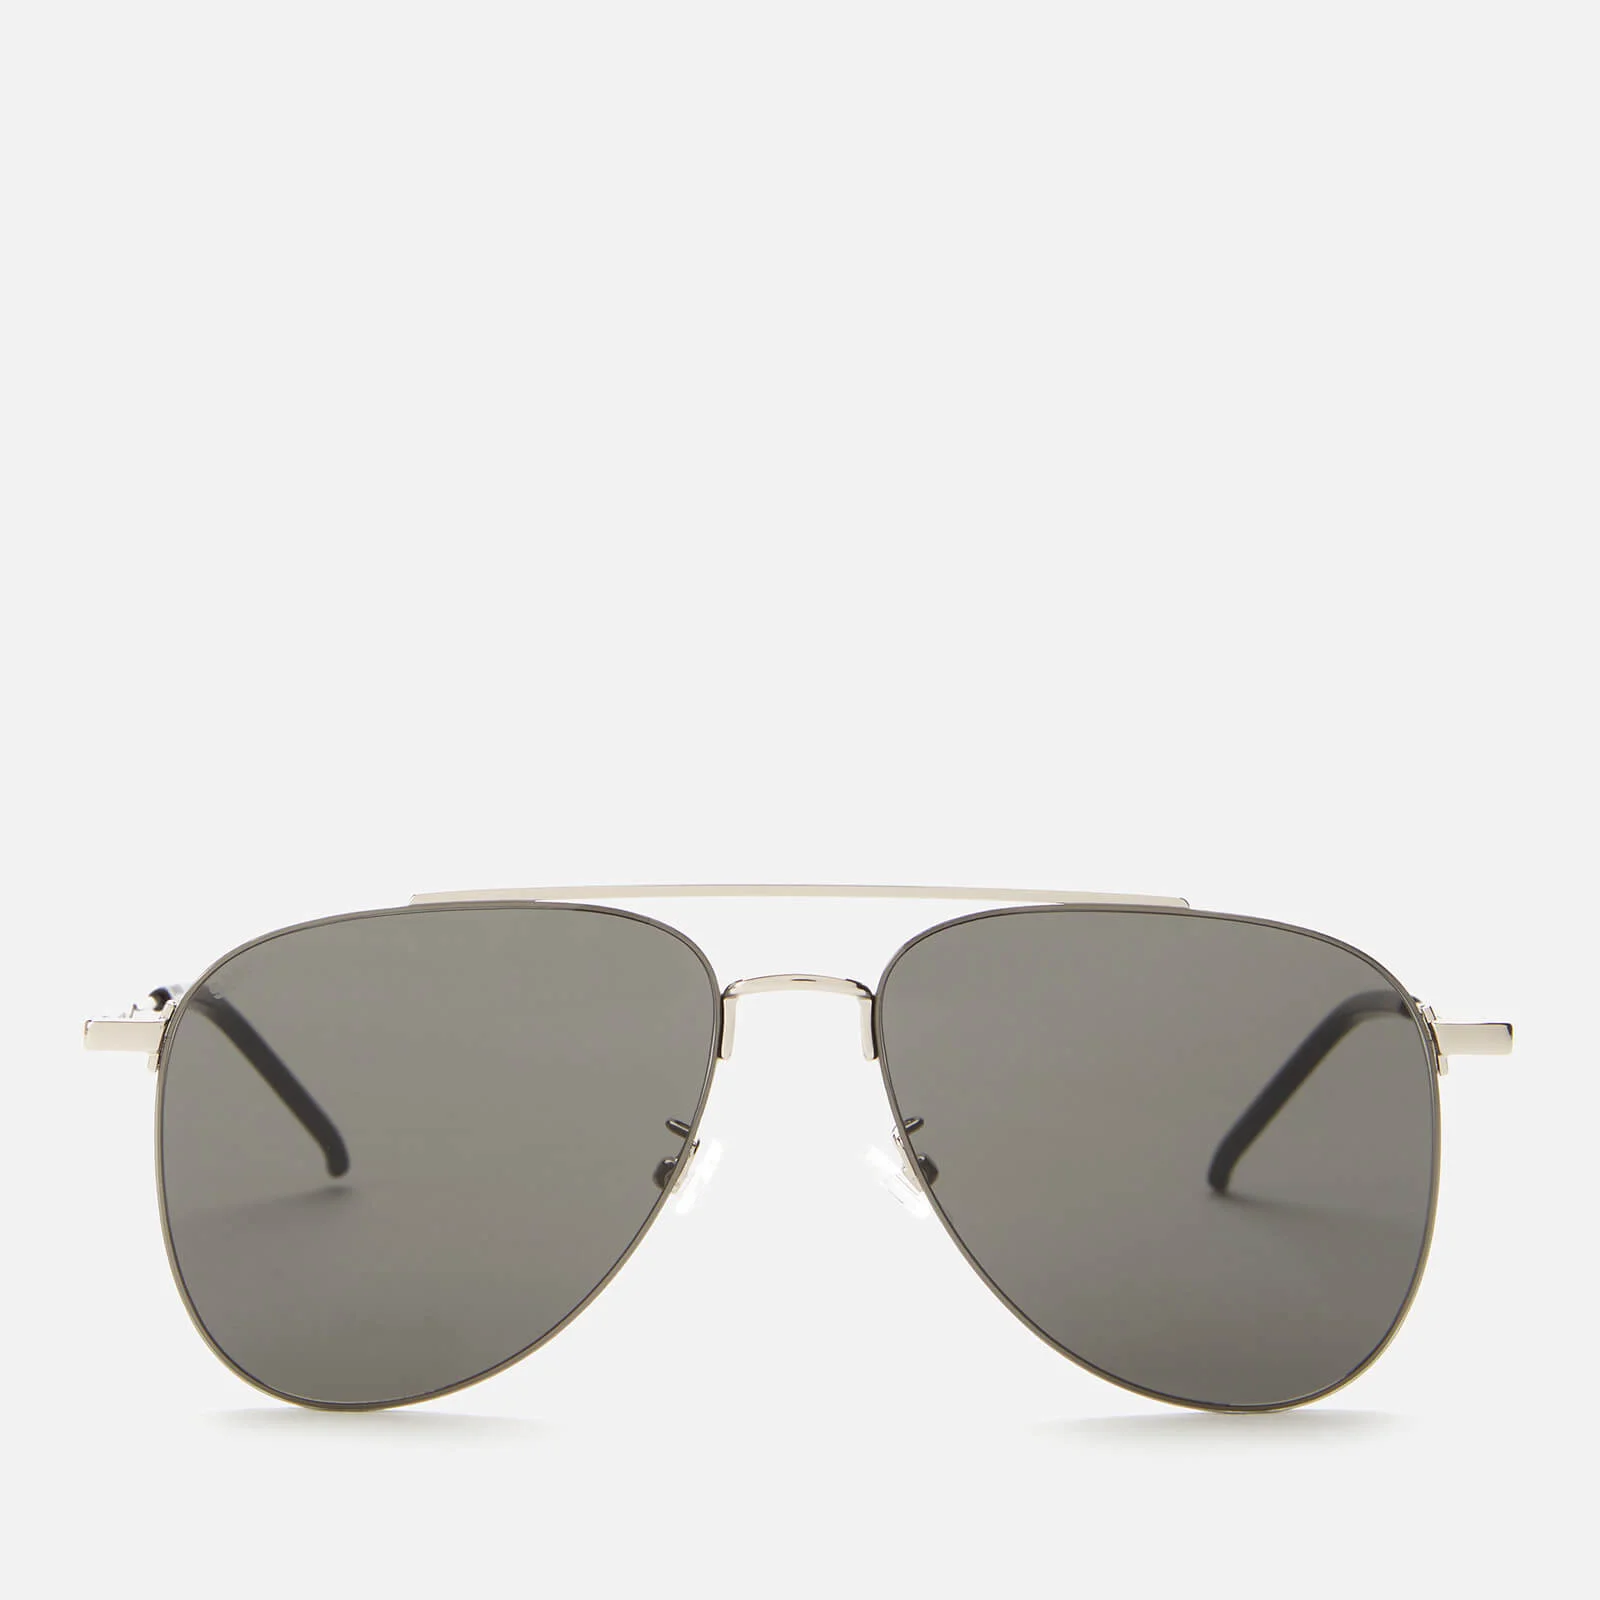 Saint Laurent Men's Sl 392 Wire Aviator Sunglasses - Silver/Grey Image 1